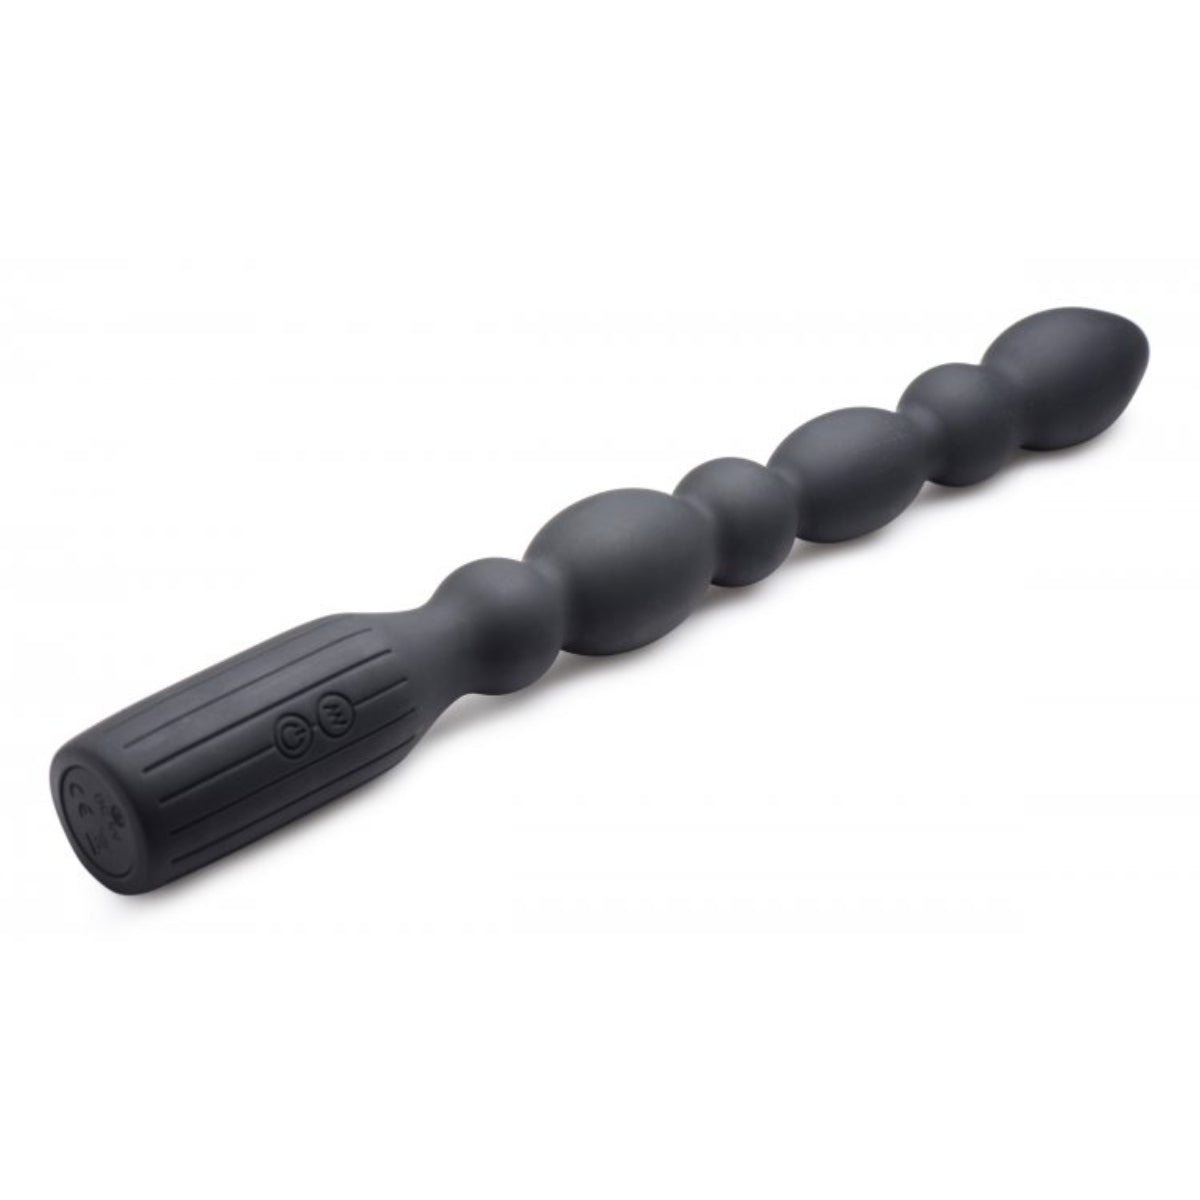 Master Series Viper Beads Premium Silicone Anal Beads Vibrator Black